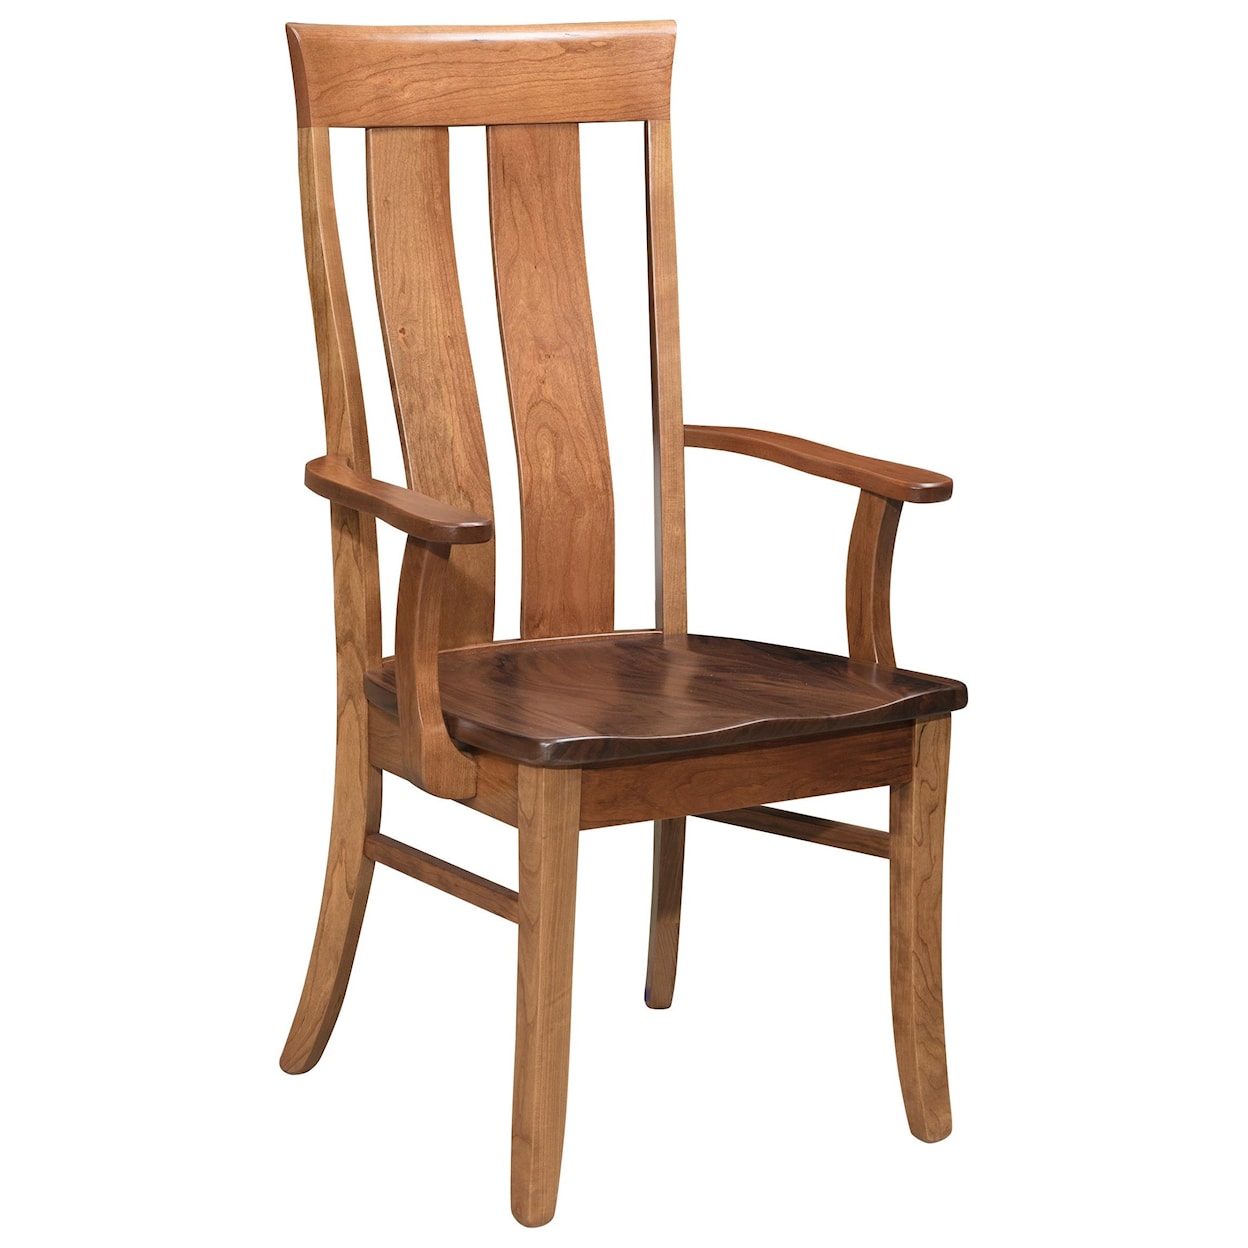 Wengerd Wood Products Aurora Arm Chair